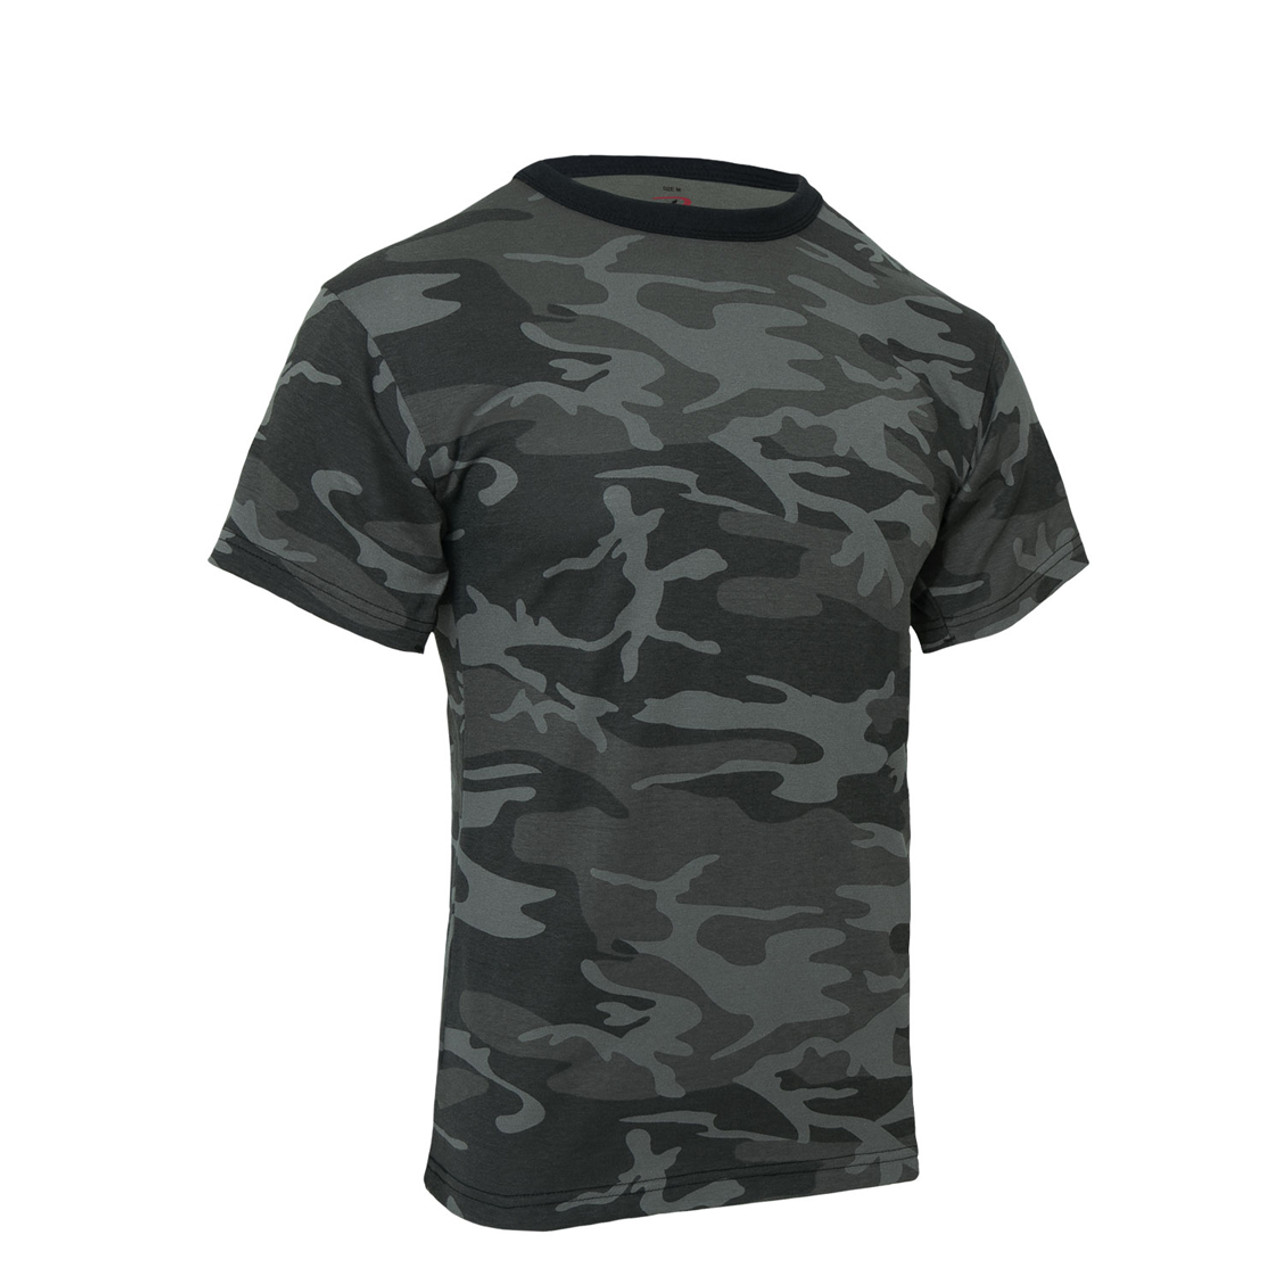 Shop Black Camo T Shirts - Fatigues Army Navy Gear